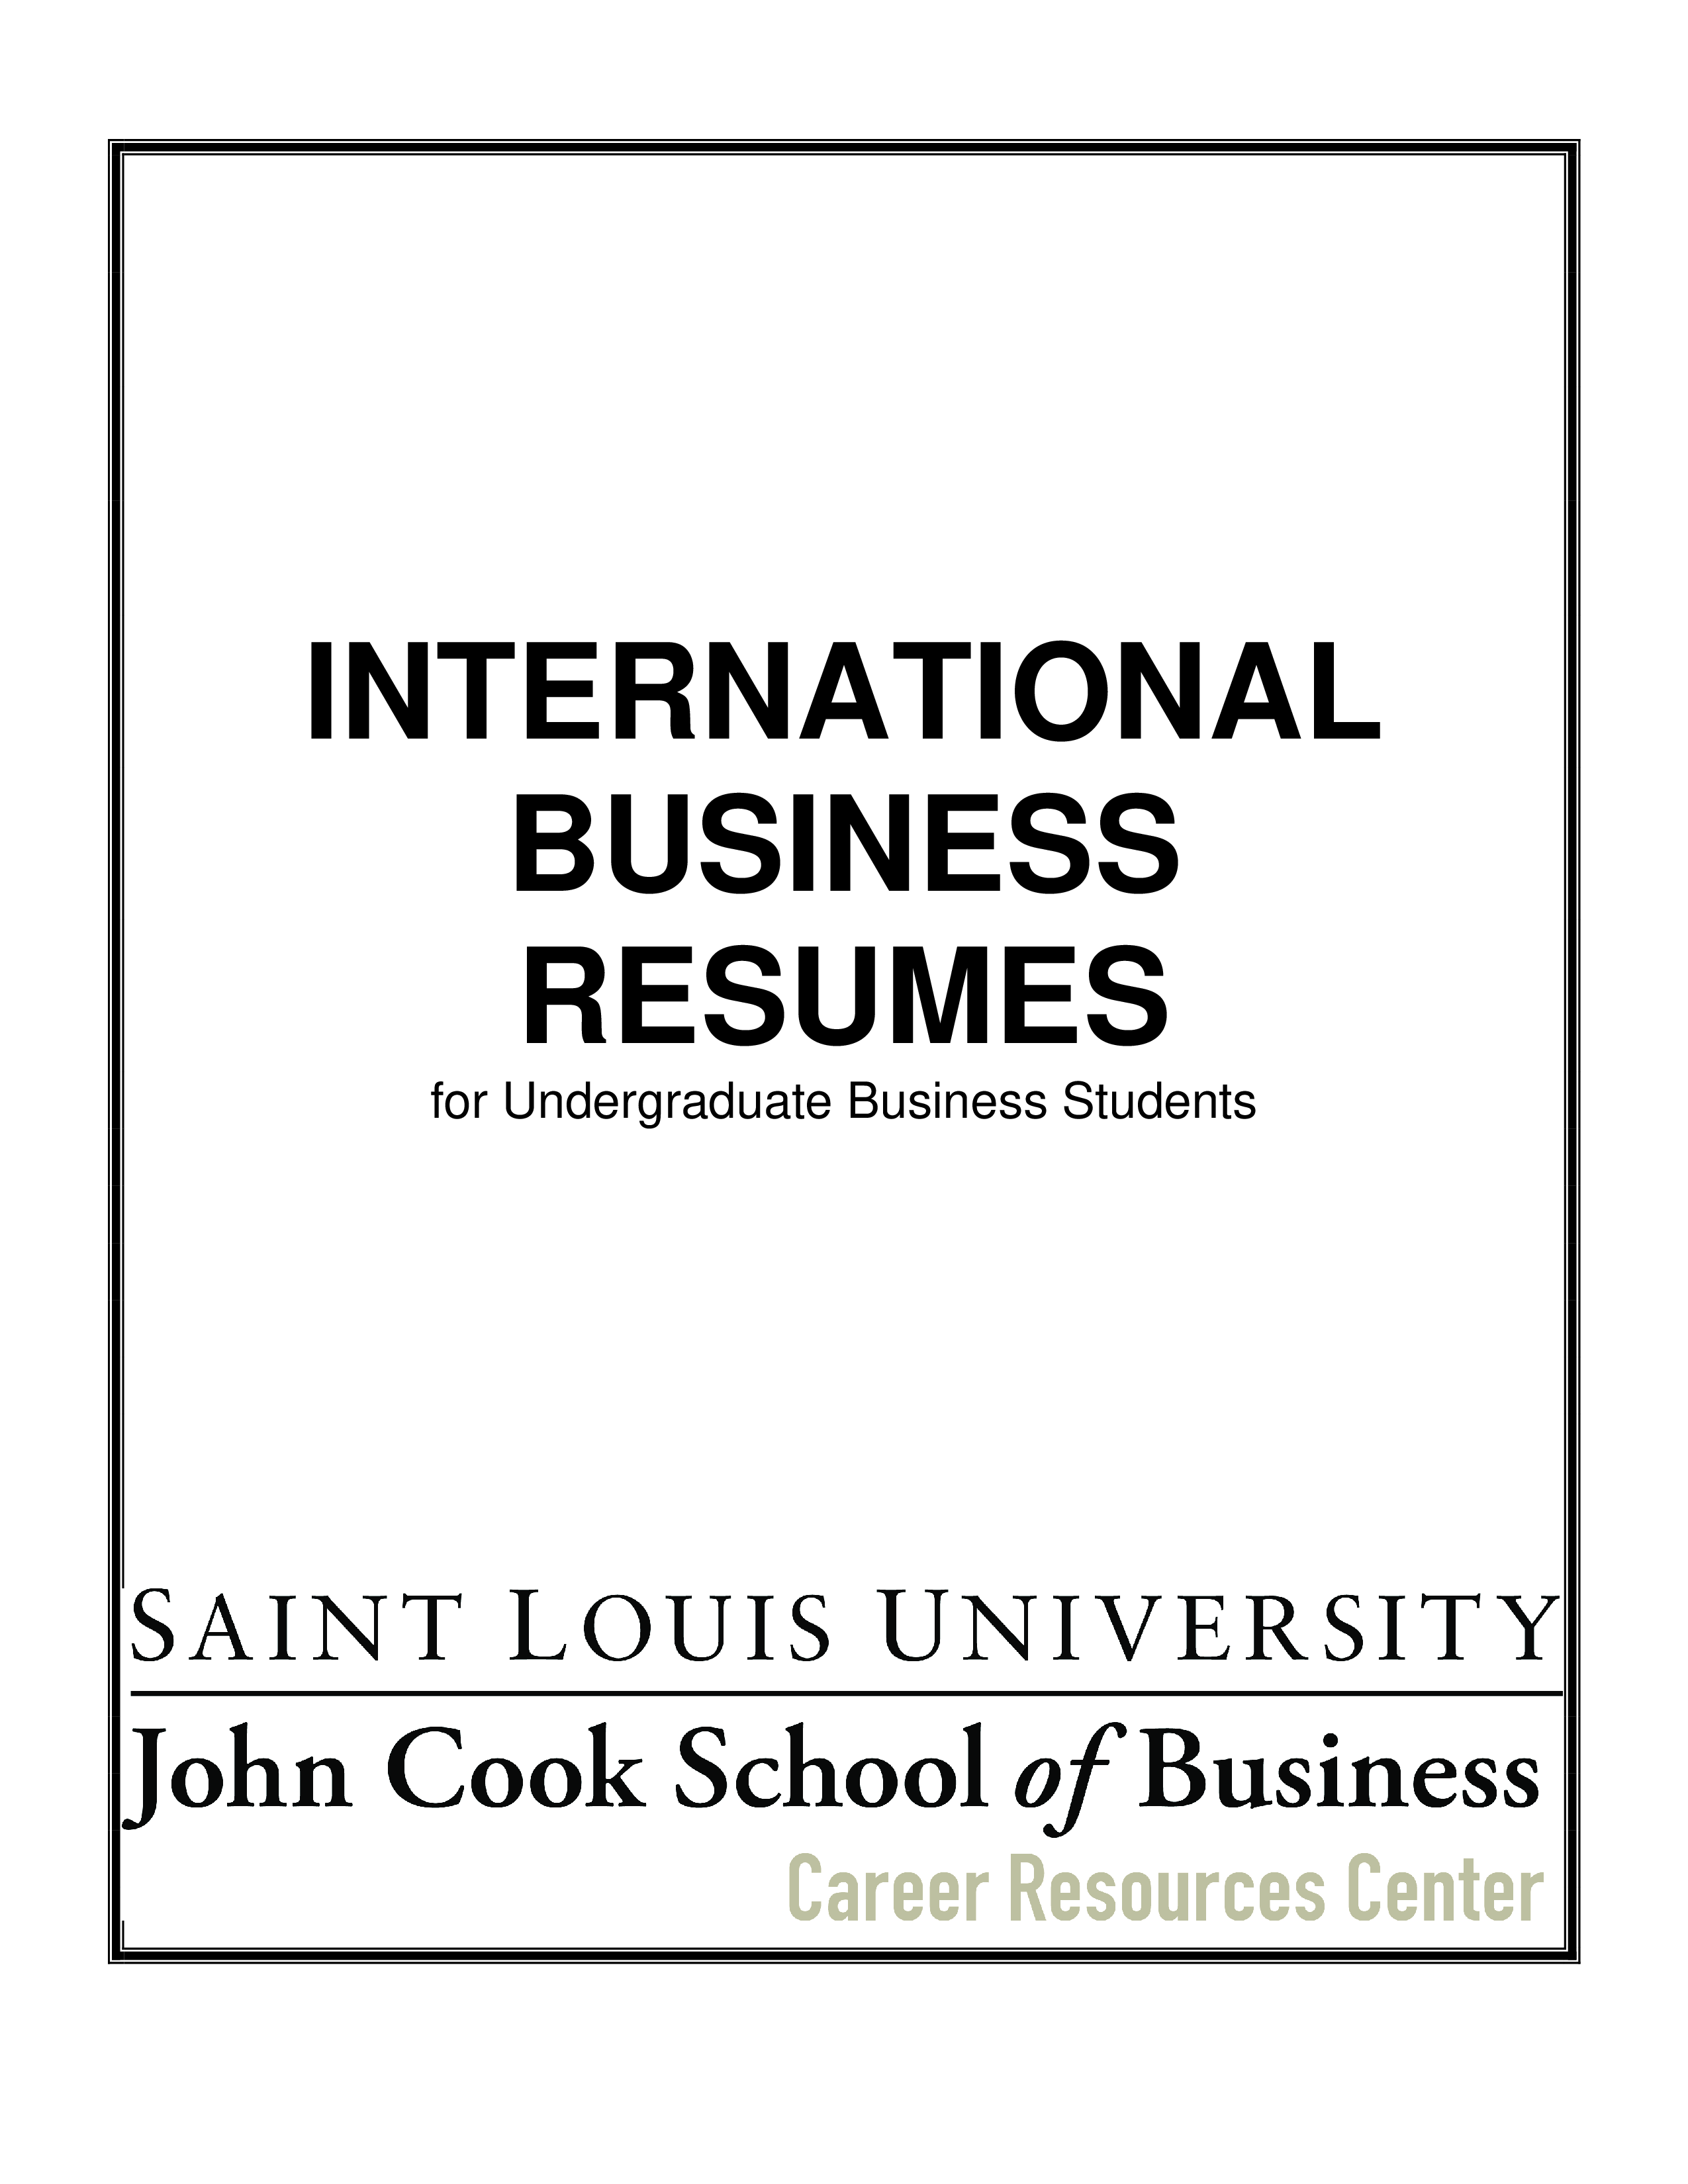 International Business Resume main image